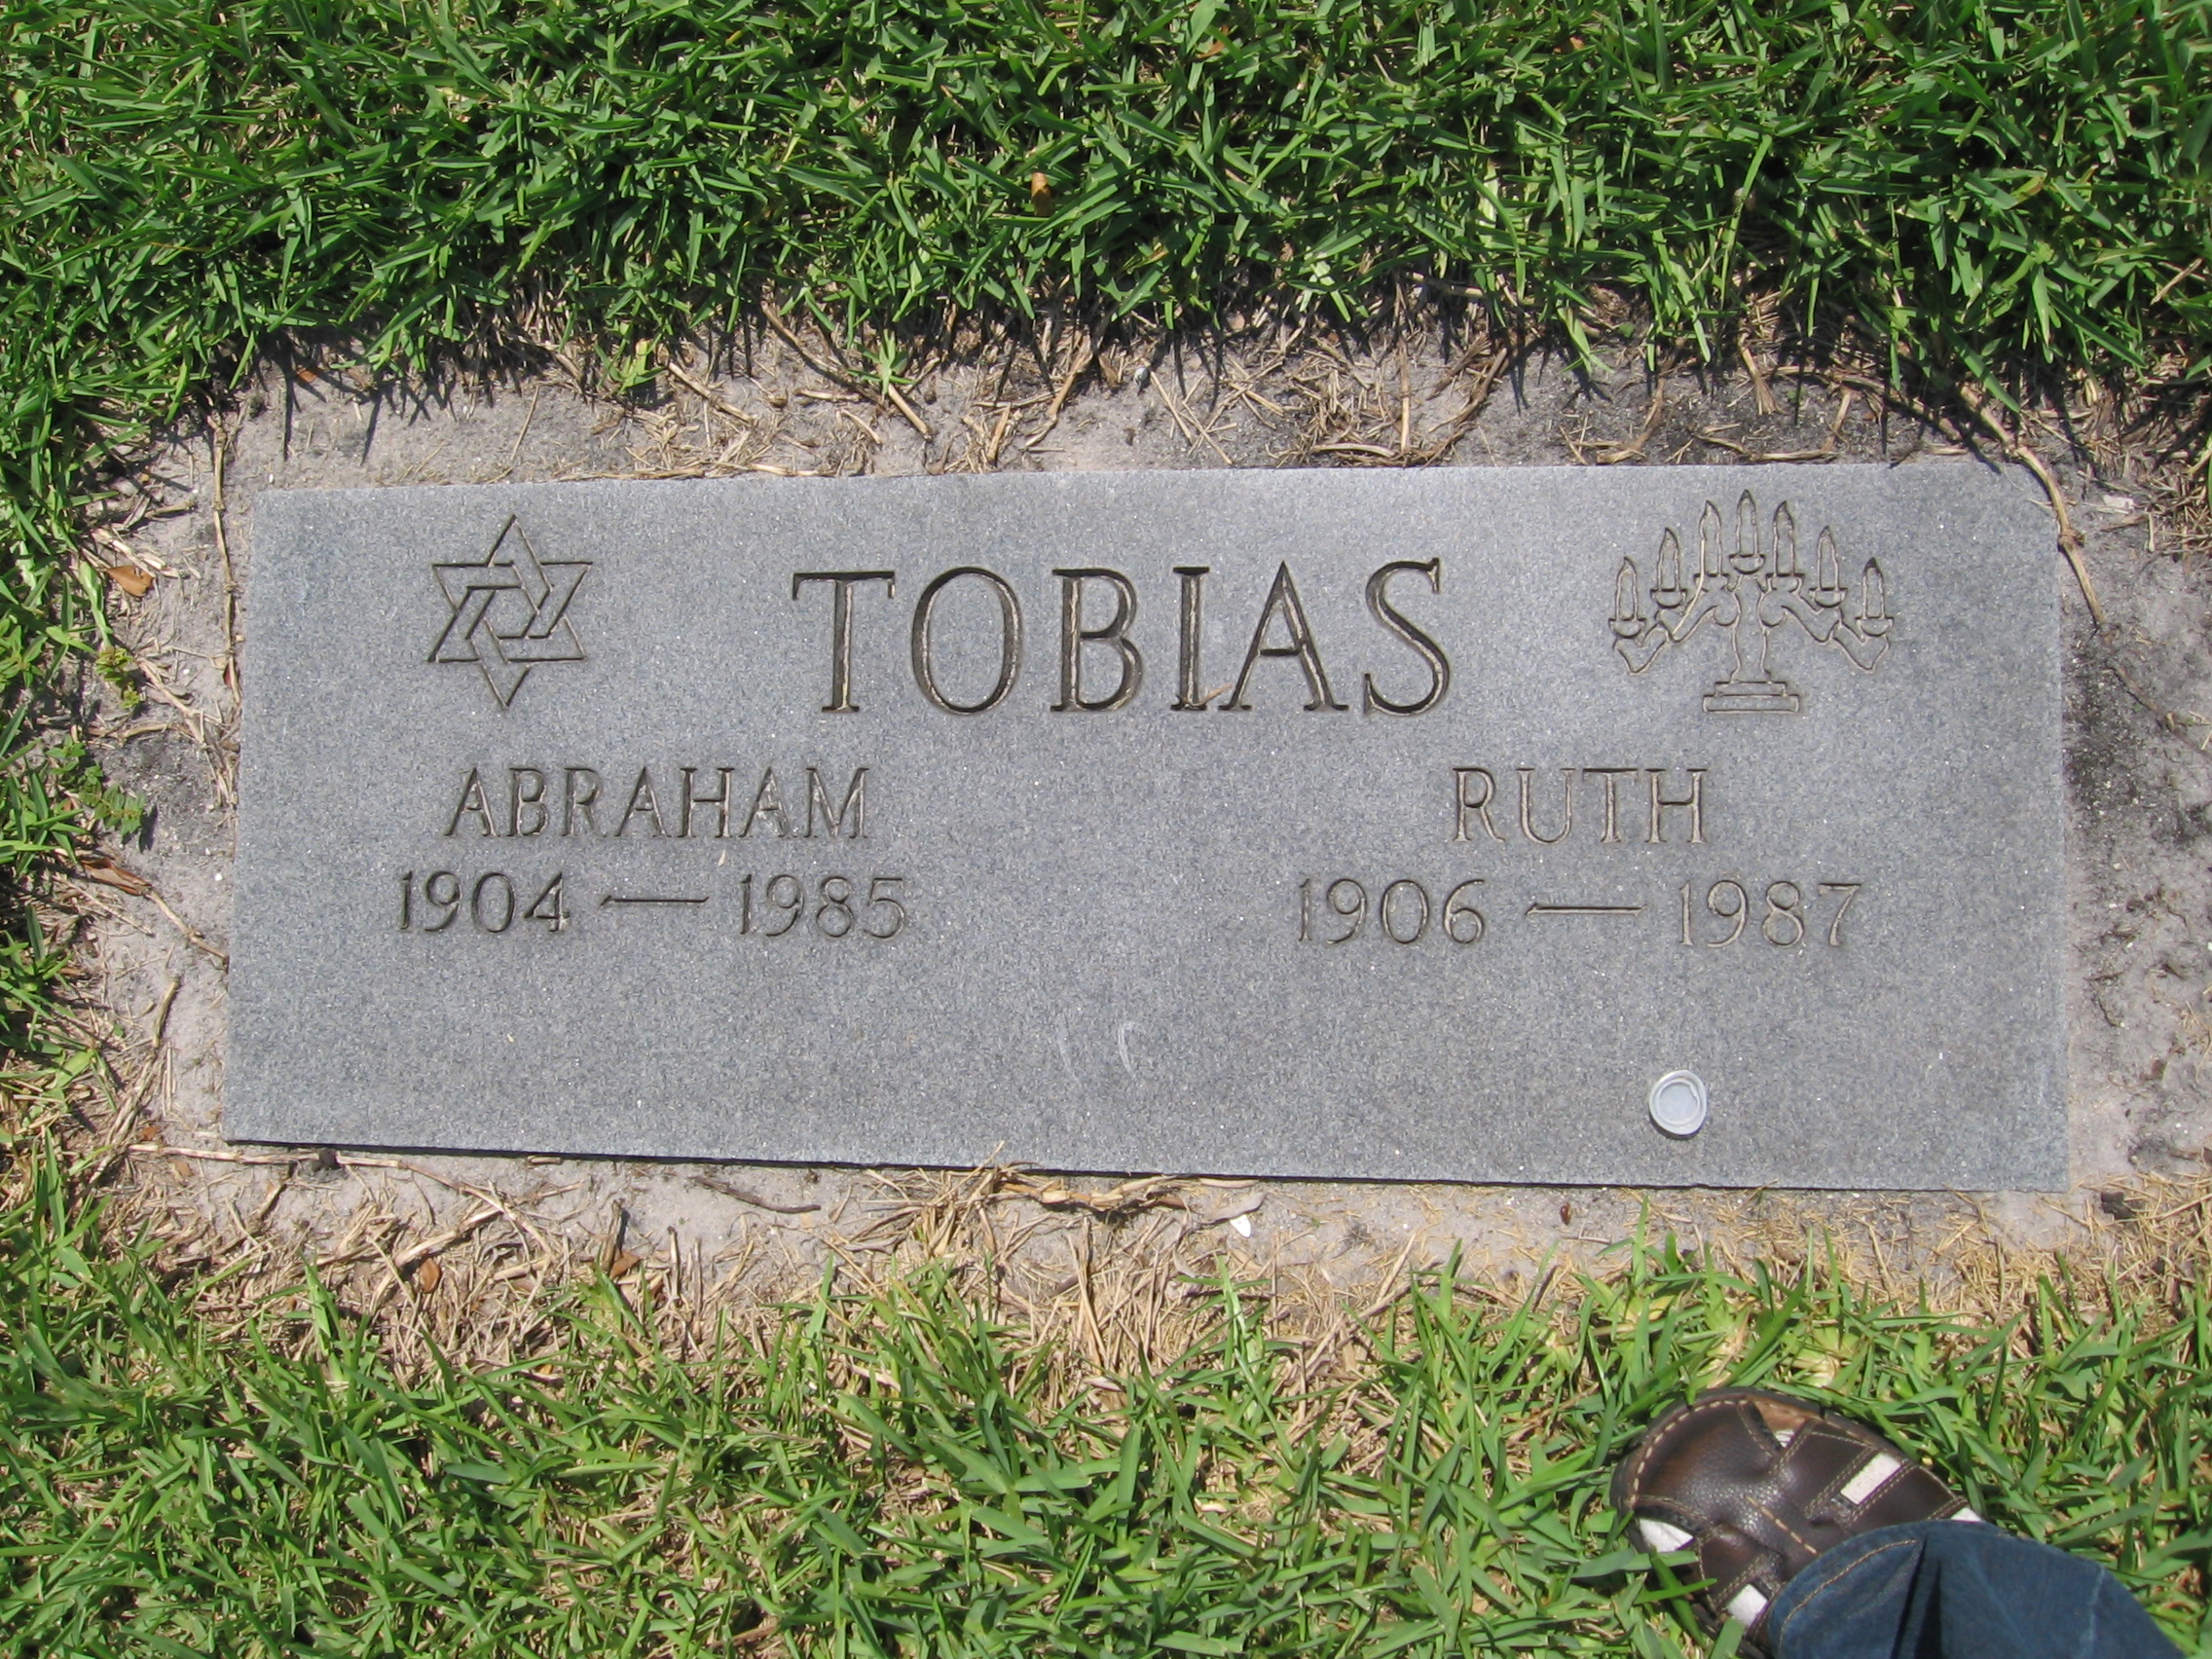 Abraham Tobias